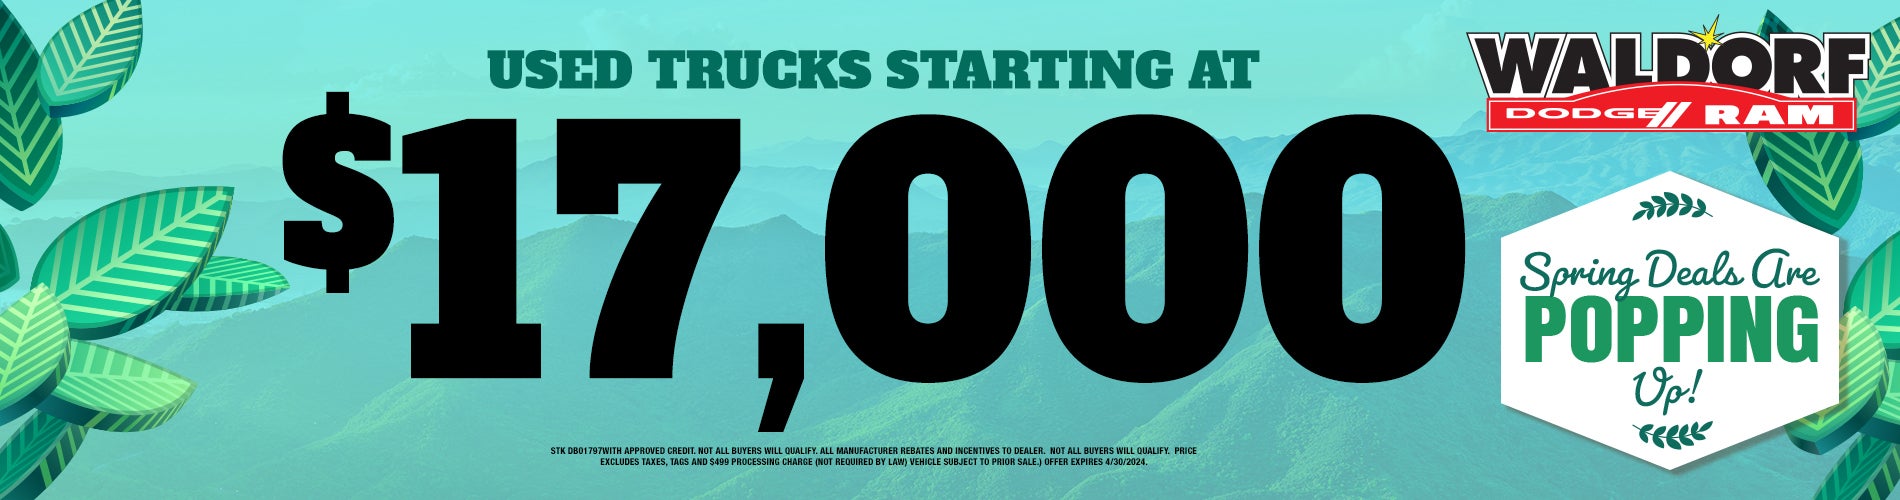 Used trucks starting at $17,000!